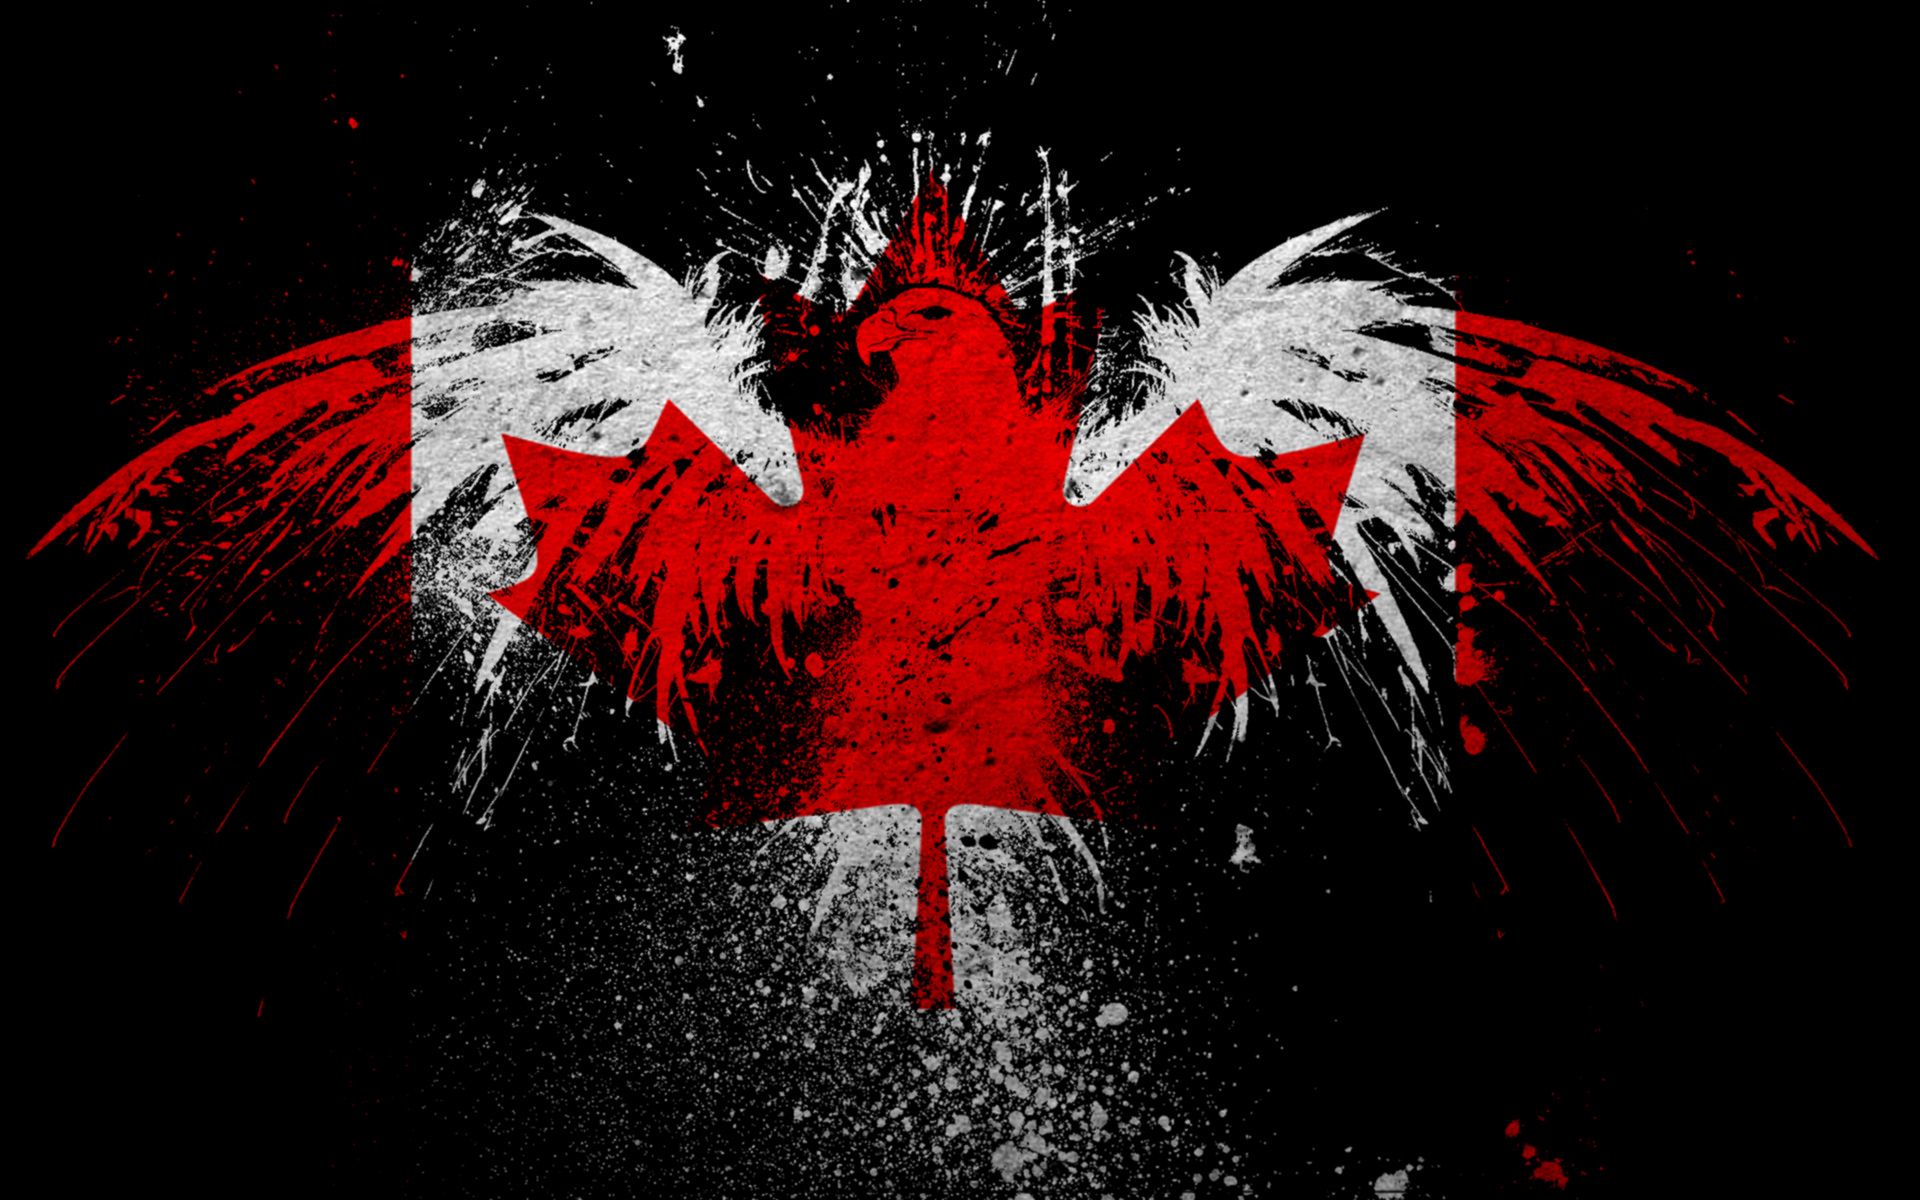 Team Canada Wallpapers - Wallpaper Cave